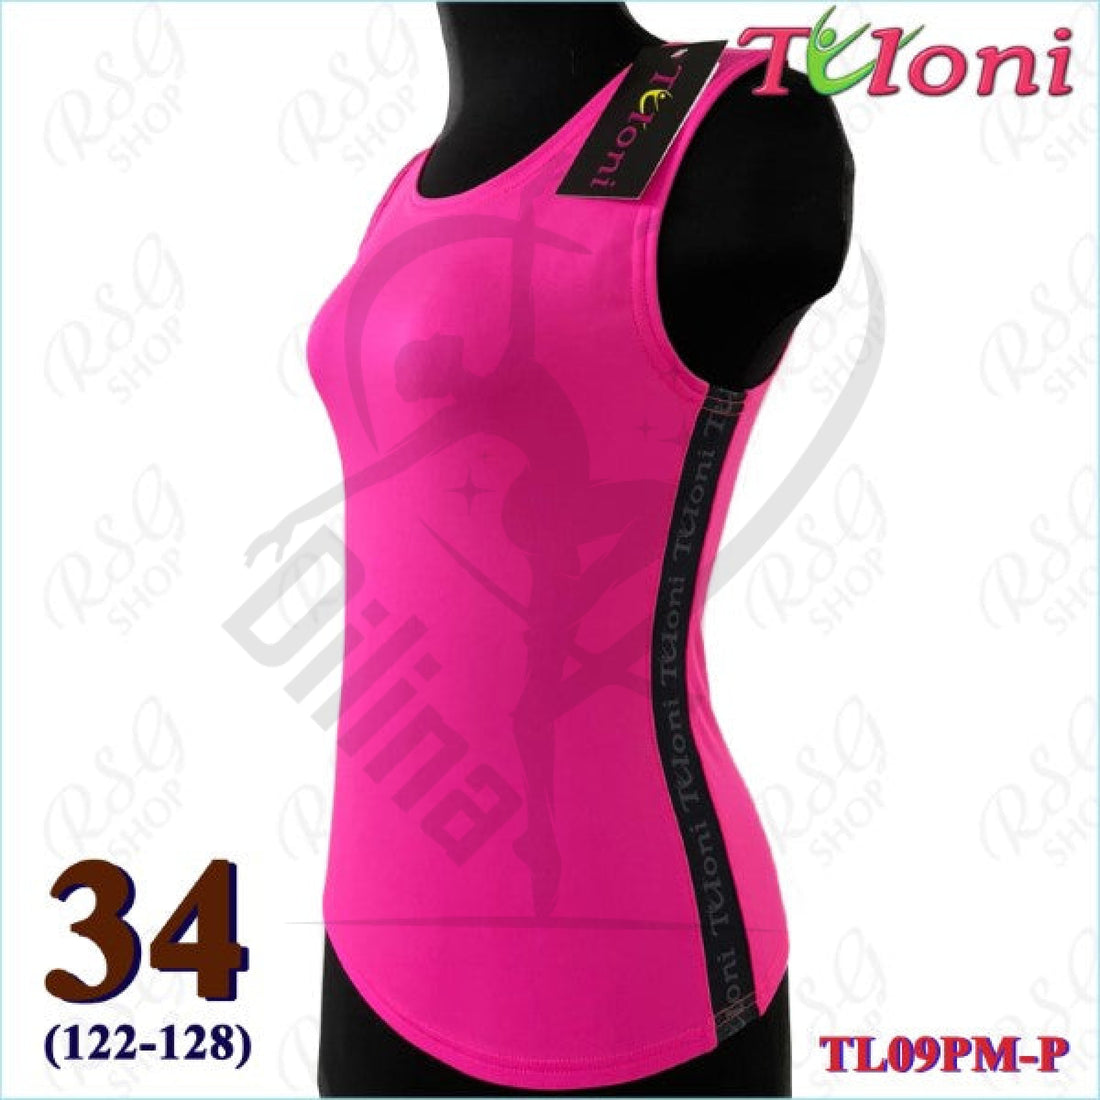 Tuloni Long Mesh Tank Top Pink 34 (122-128) T Shirts & Tops